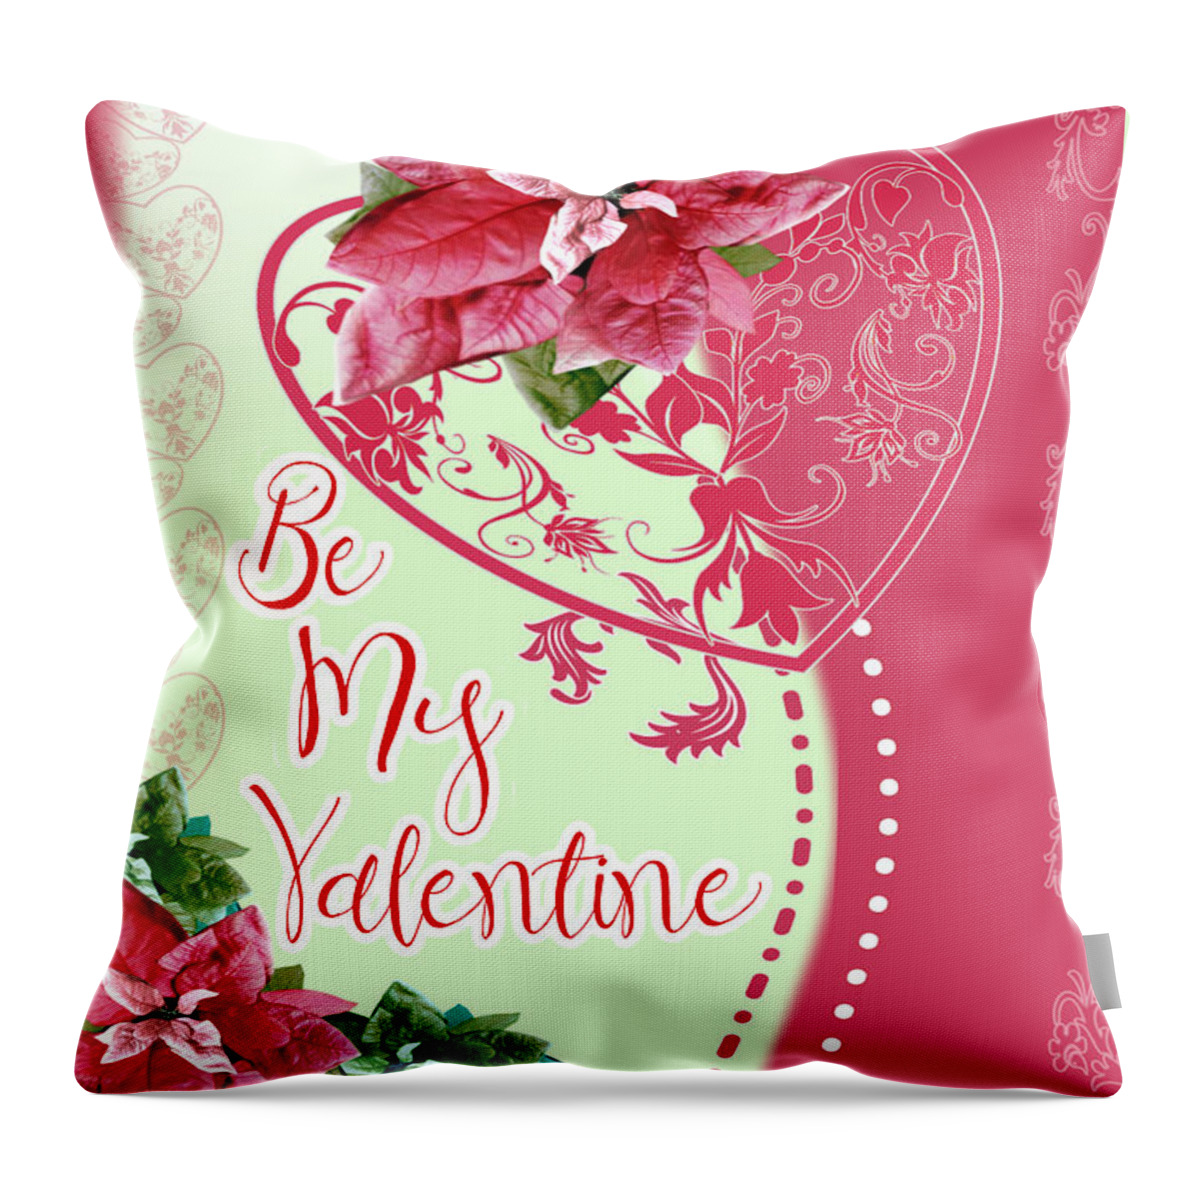 Be My Valentine February 14th Throw Pillow featuring the digital art Be My Valentine February 14th #2 by Delynn Addams